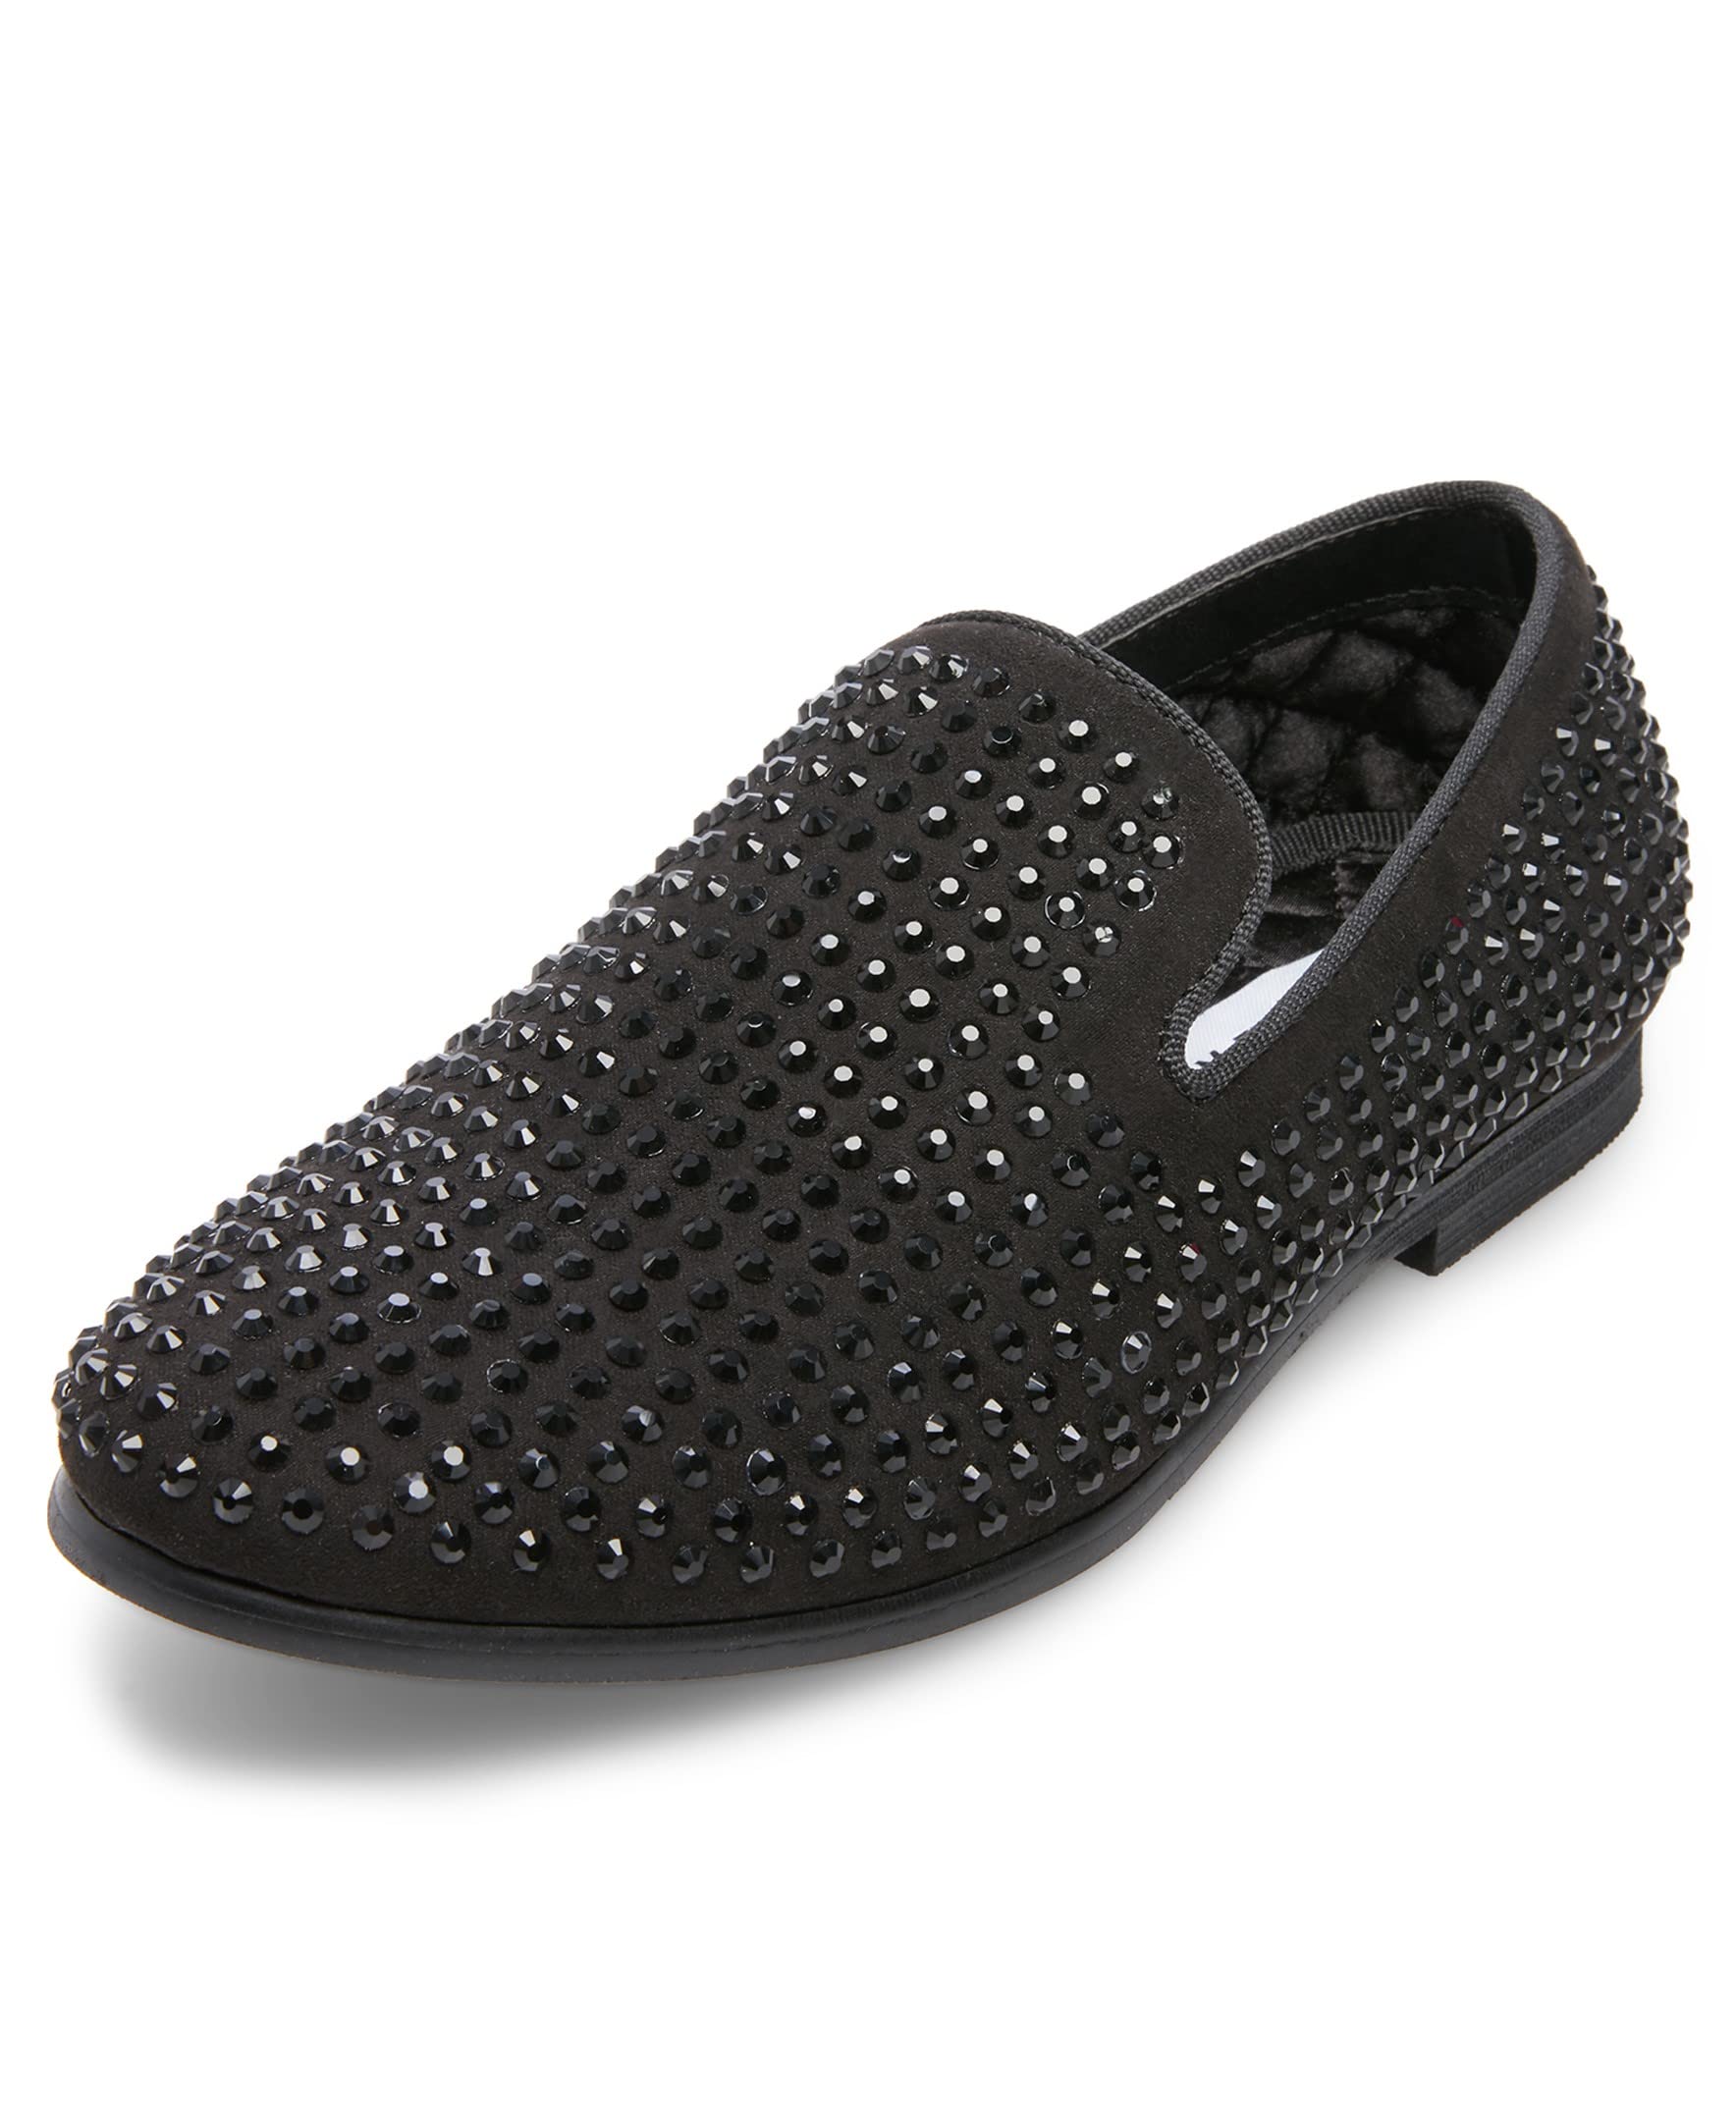 Steve Madden Boys Shoes Unisex-Child Caviar Loafer